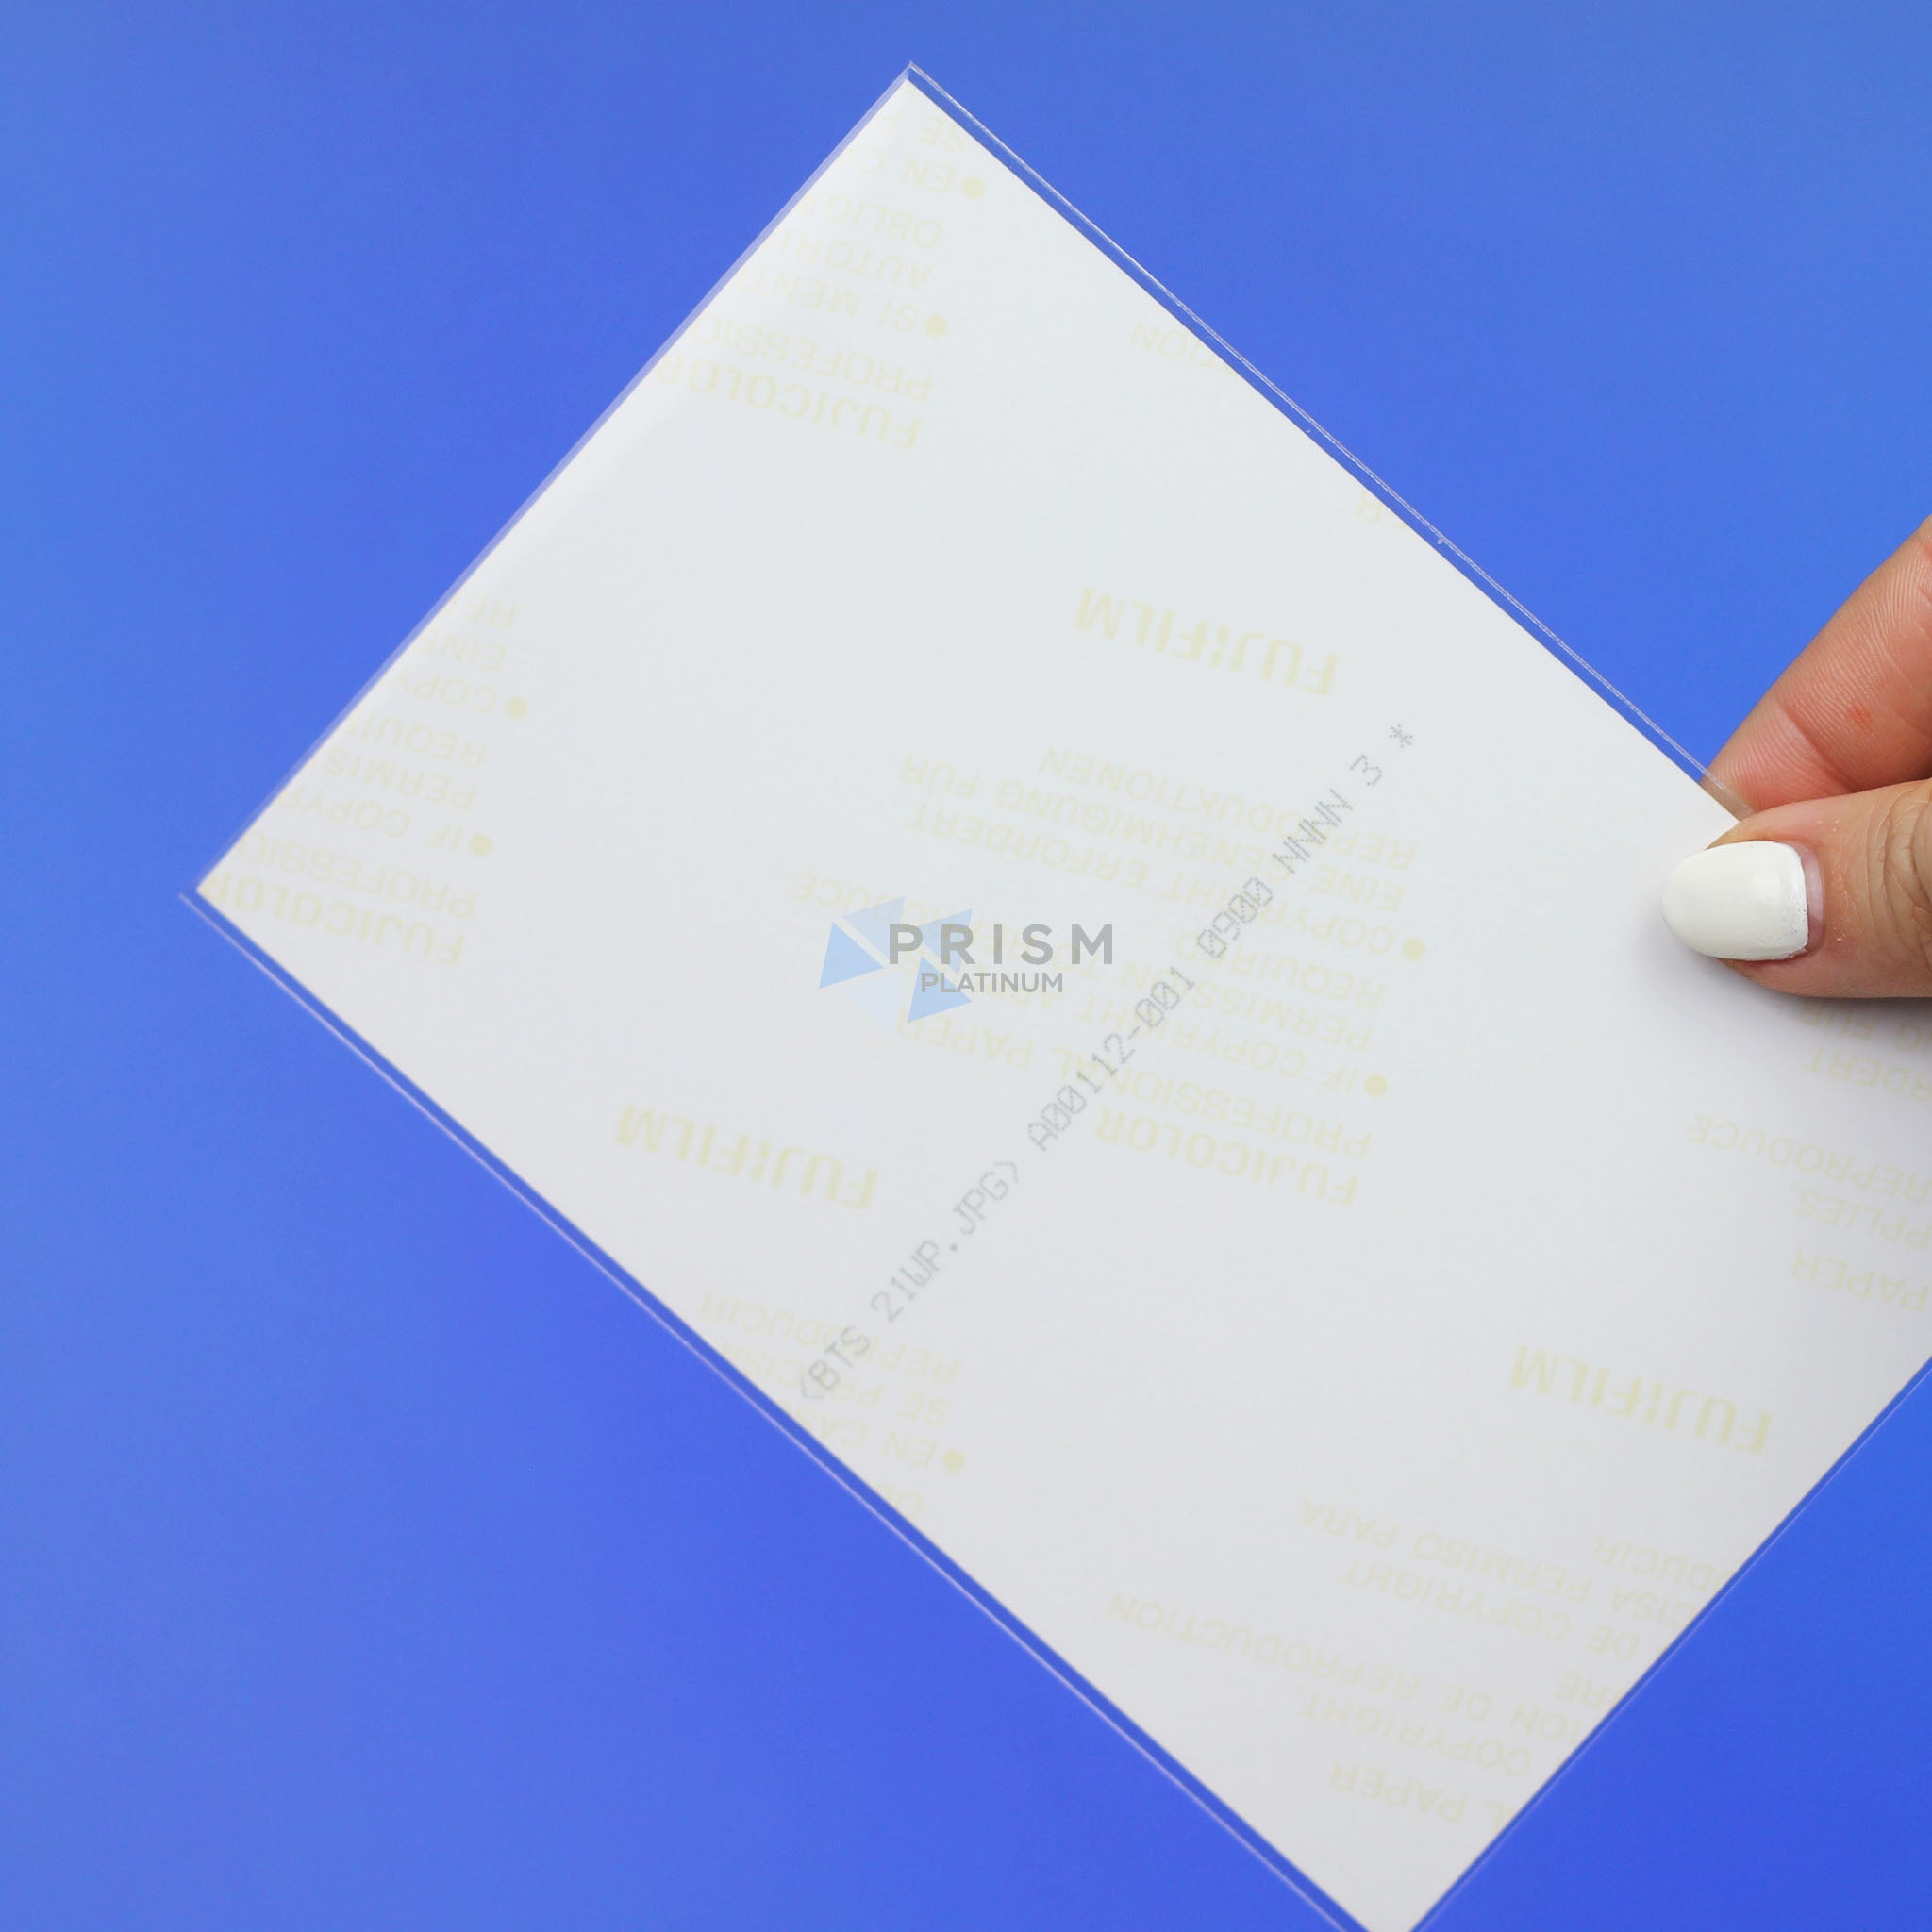 Premium Custom Postcard Sleeves - 25 Pack - Prism Platinum